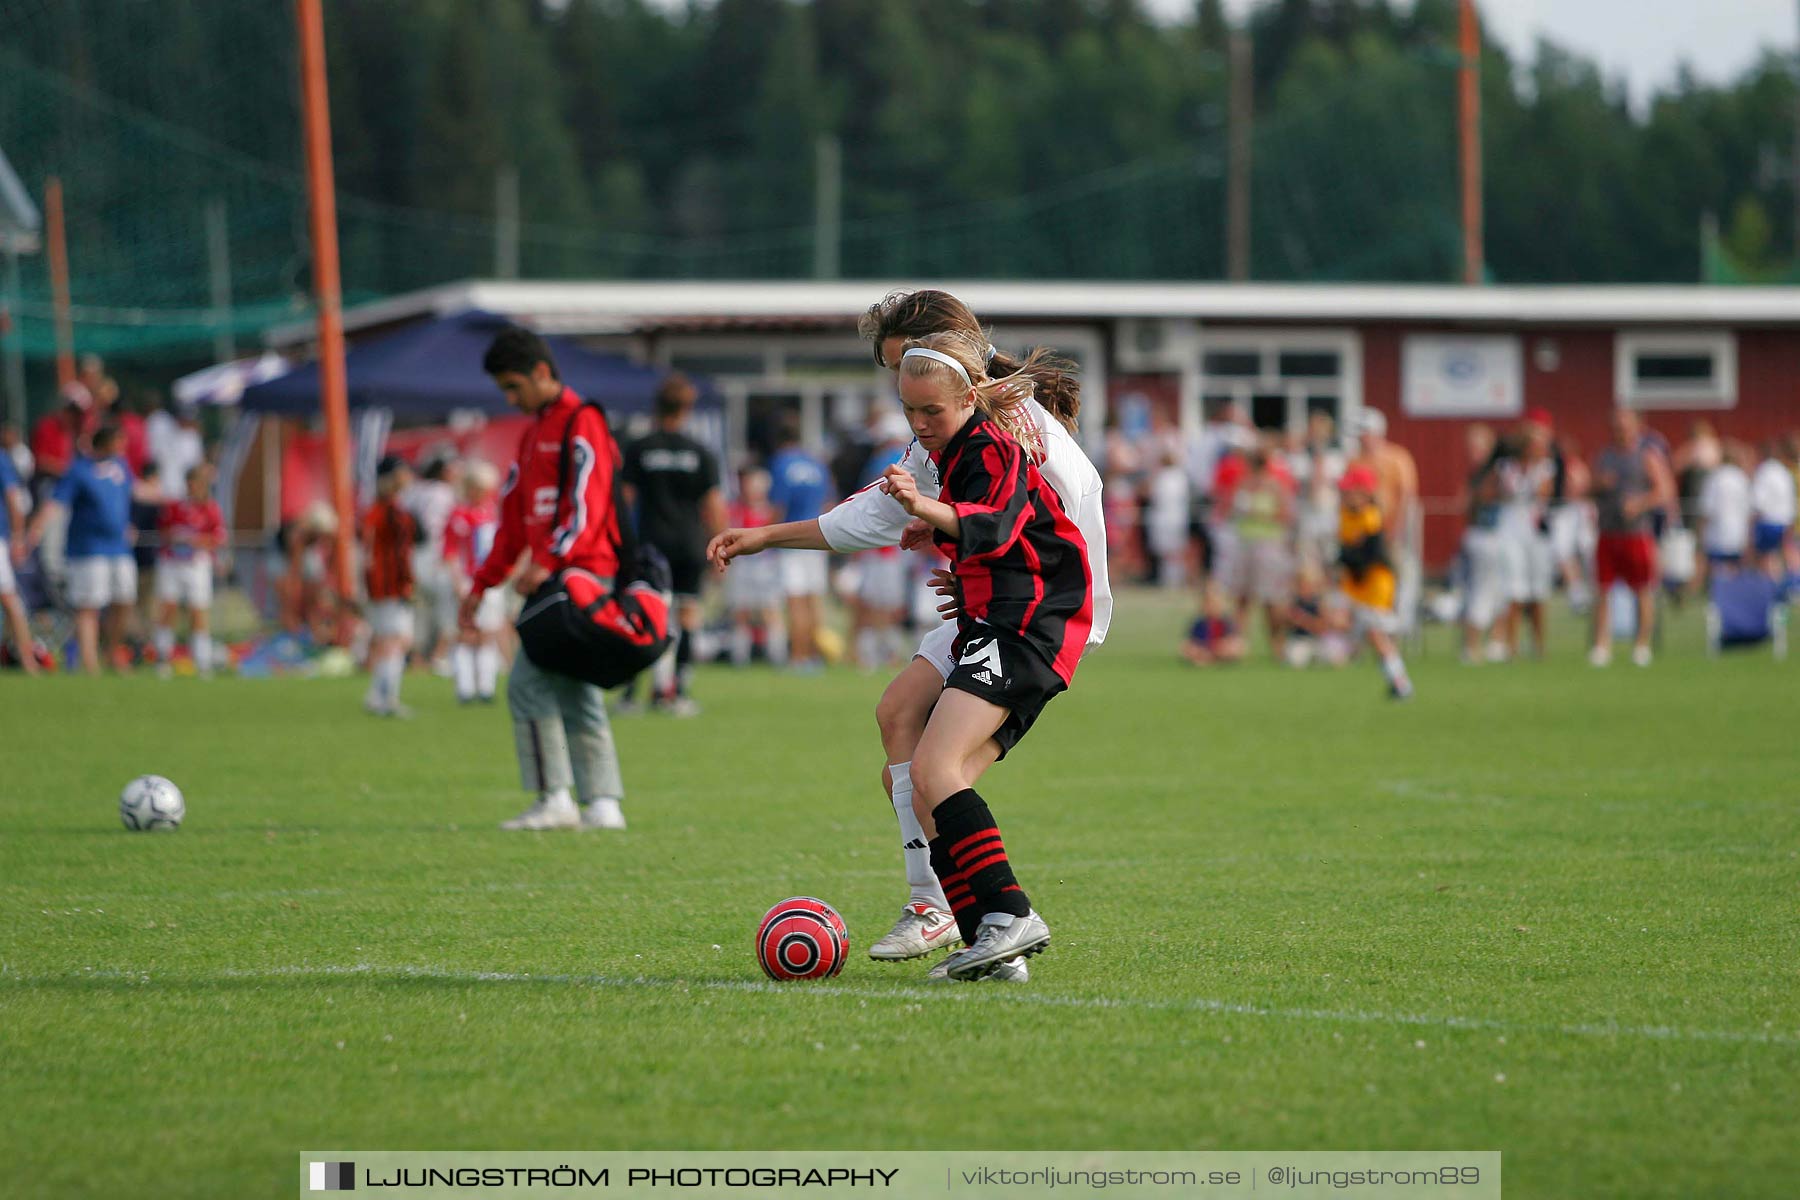 Ulvacupen 2006,mix,Åbrovallen,Ulvåker,Sverige,Fotboll,,2006,147387